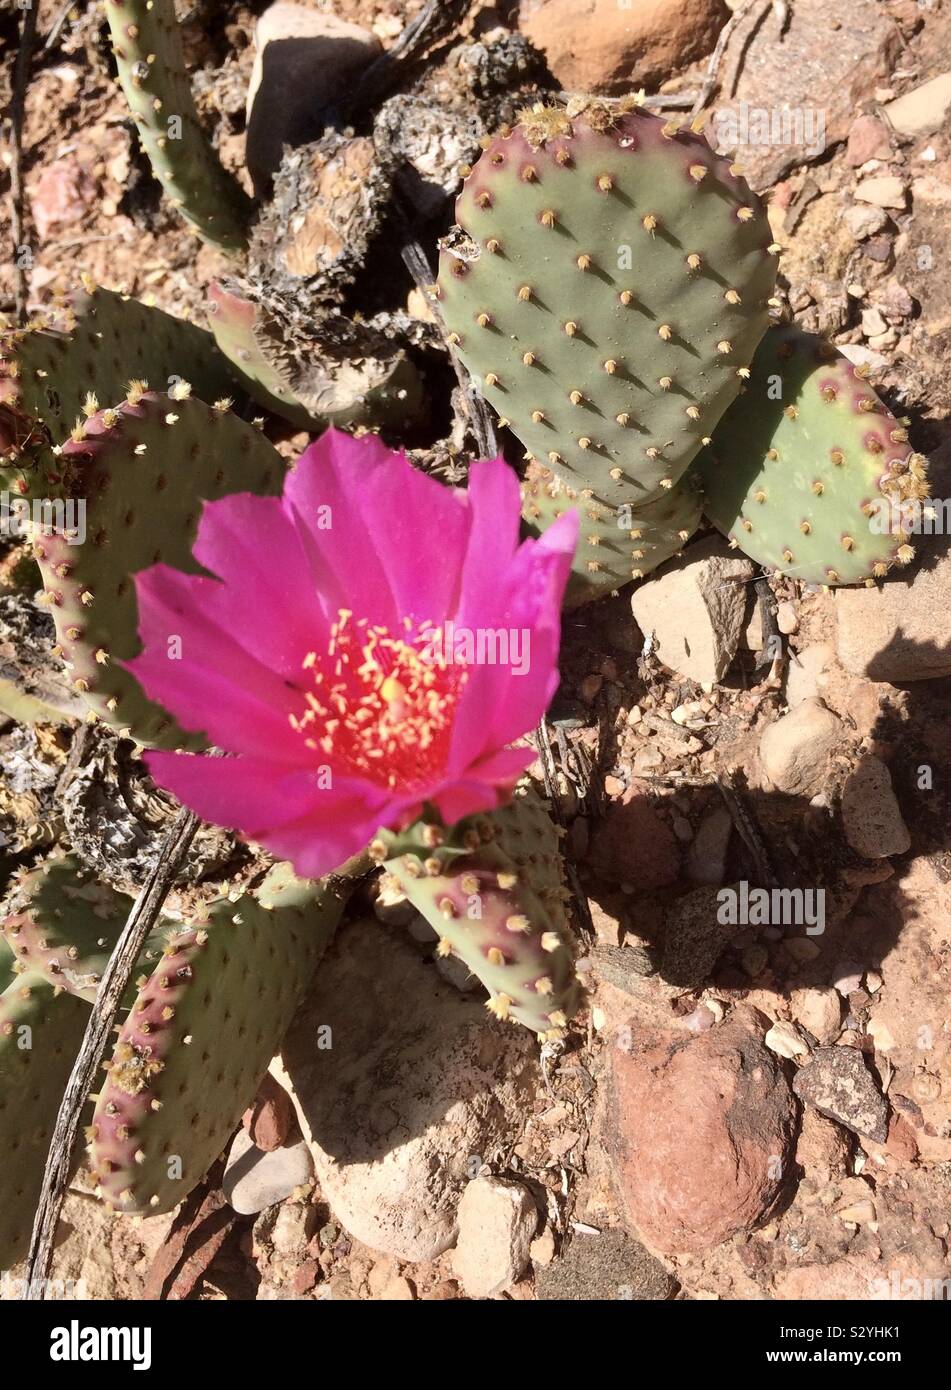 1 Cutting Cactus Beaver Tail Pink Flower Heart Prickly Pear Opuntia basilaris